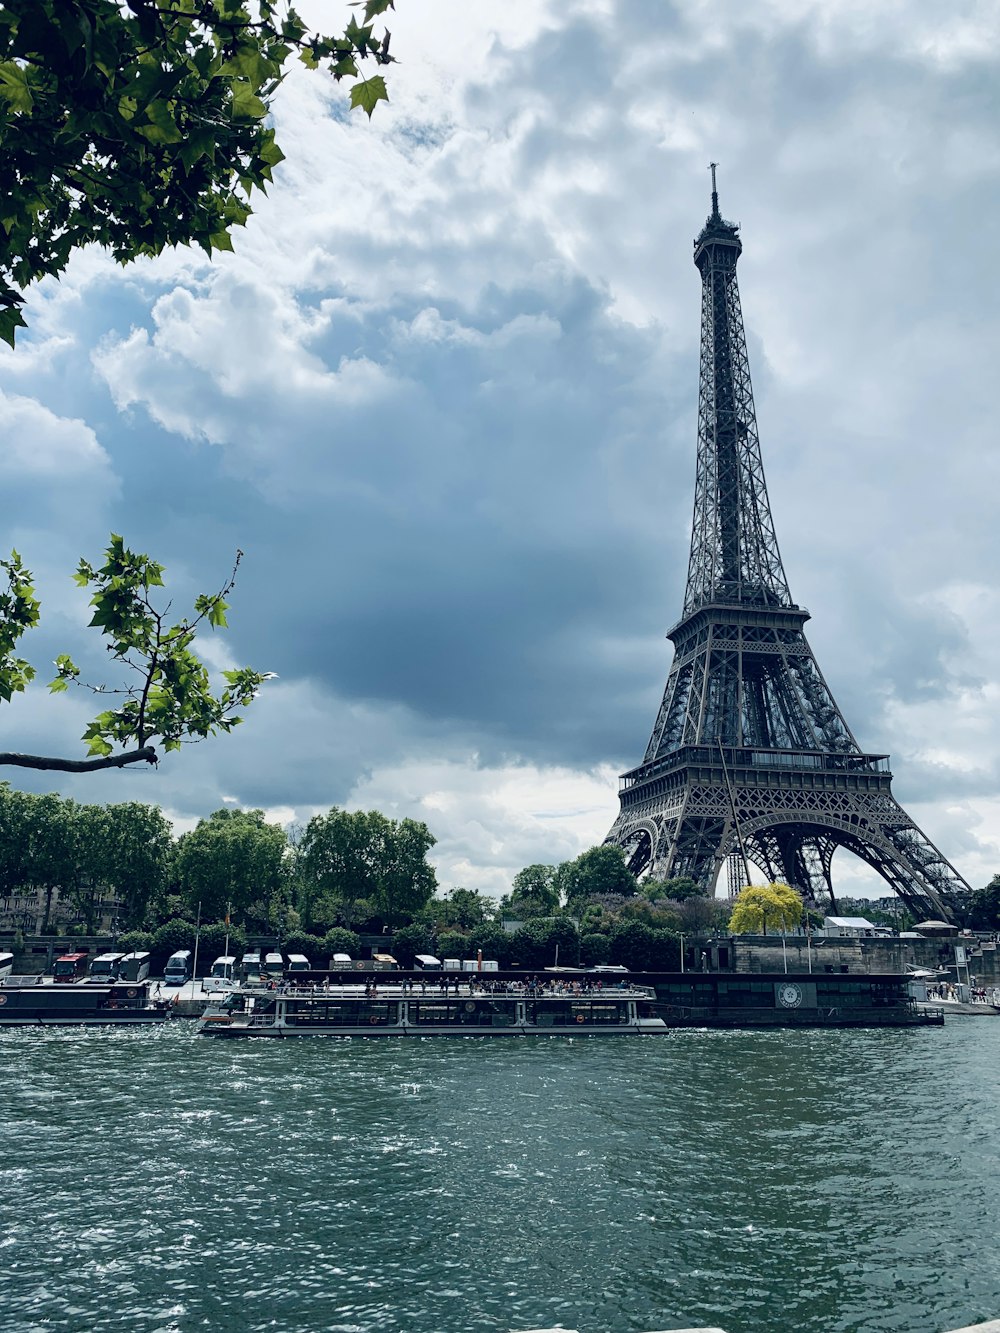 Eiffel tower during daytime